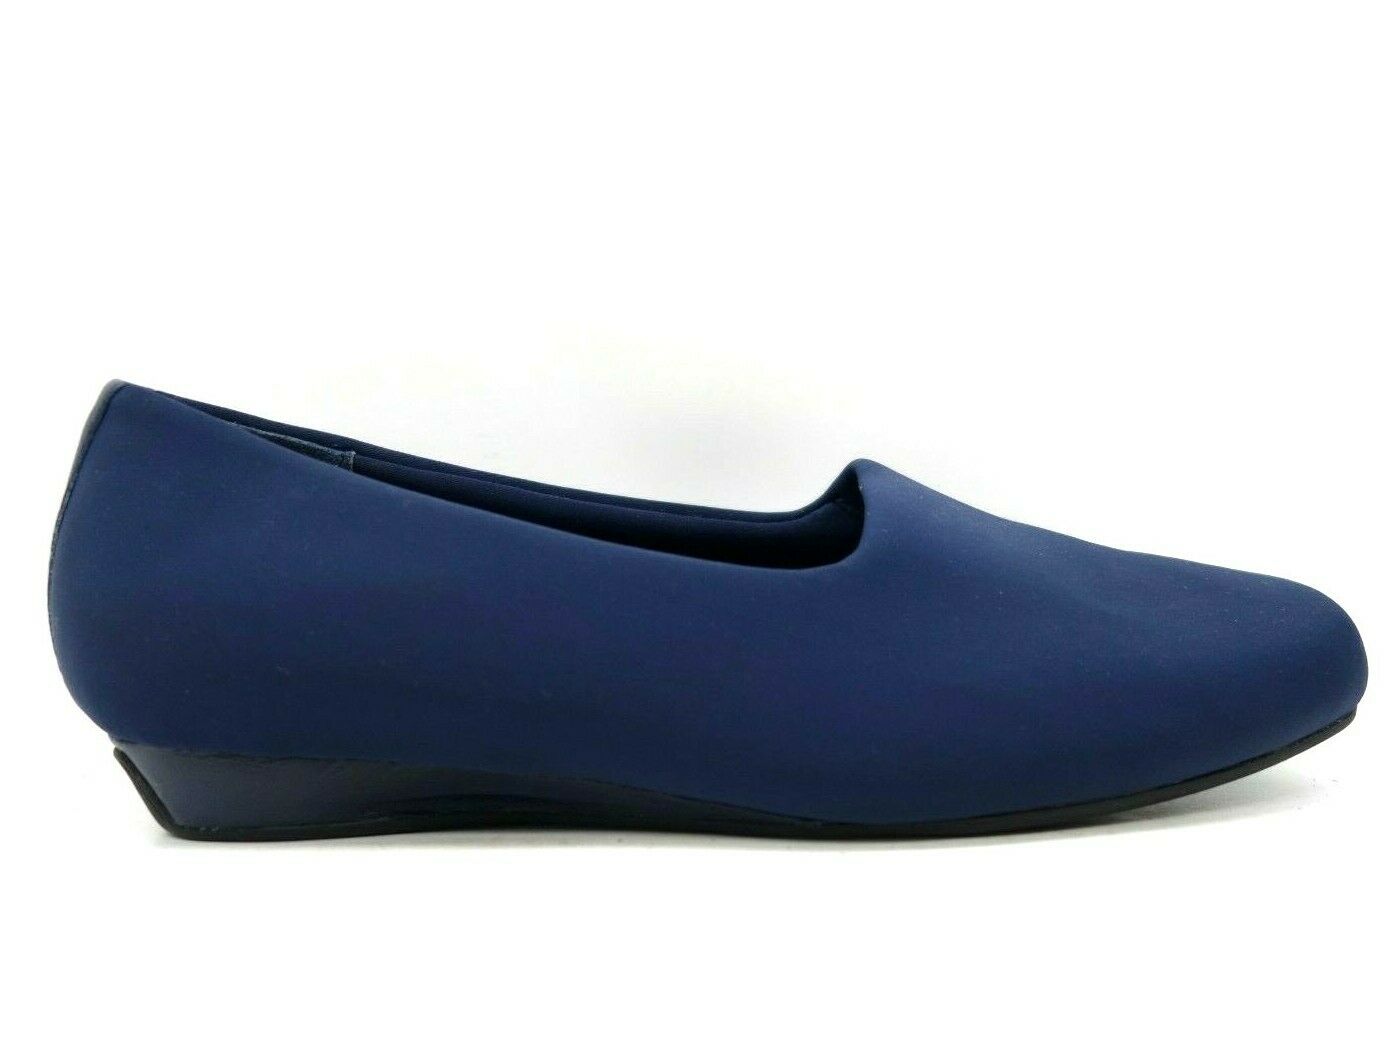 Vionic Powell Navy Blue Slip On Comfort Wedge Heel Dress Shoes Women's 8.5 W